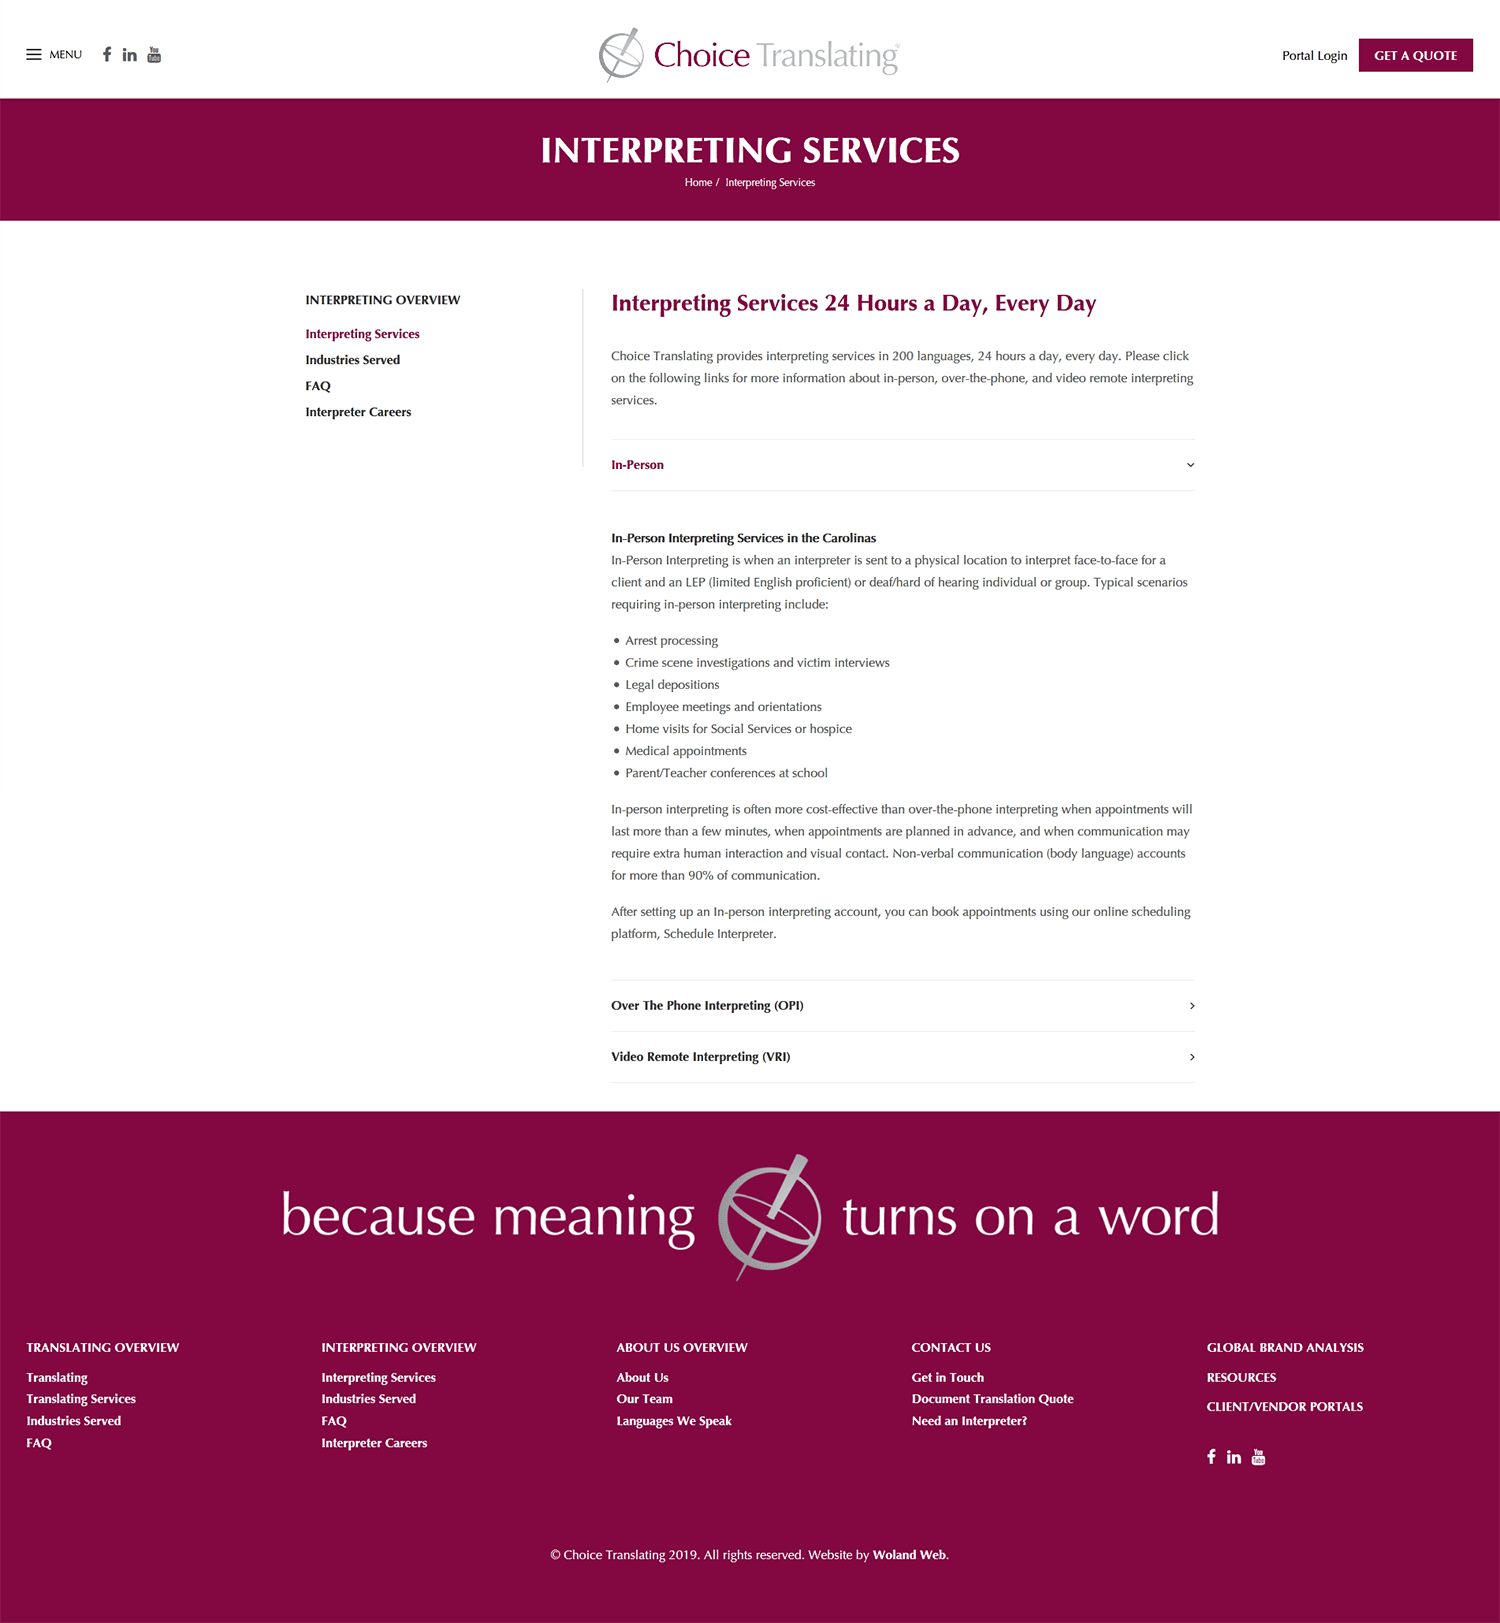 Choice Translating website interpreting services page screenshot